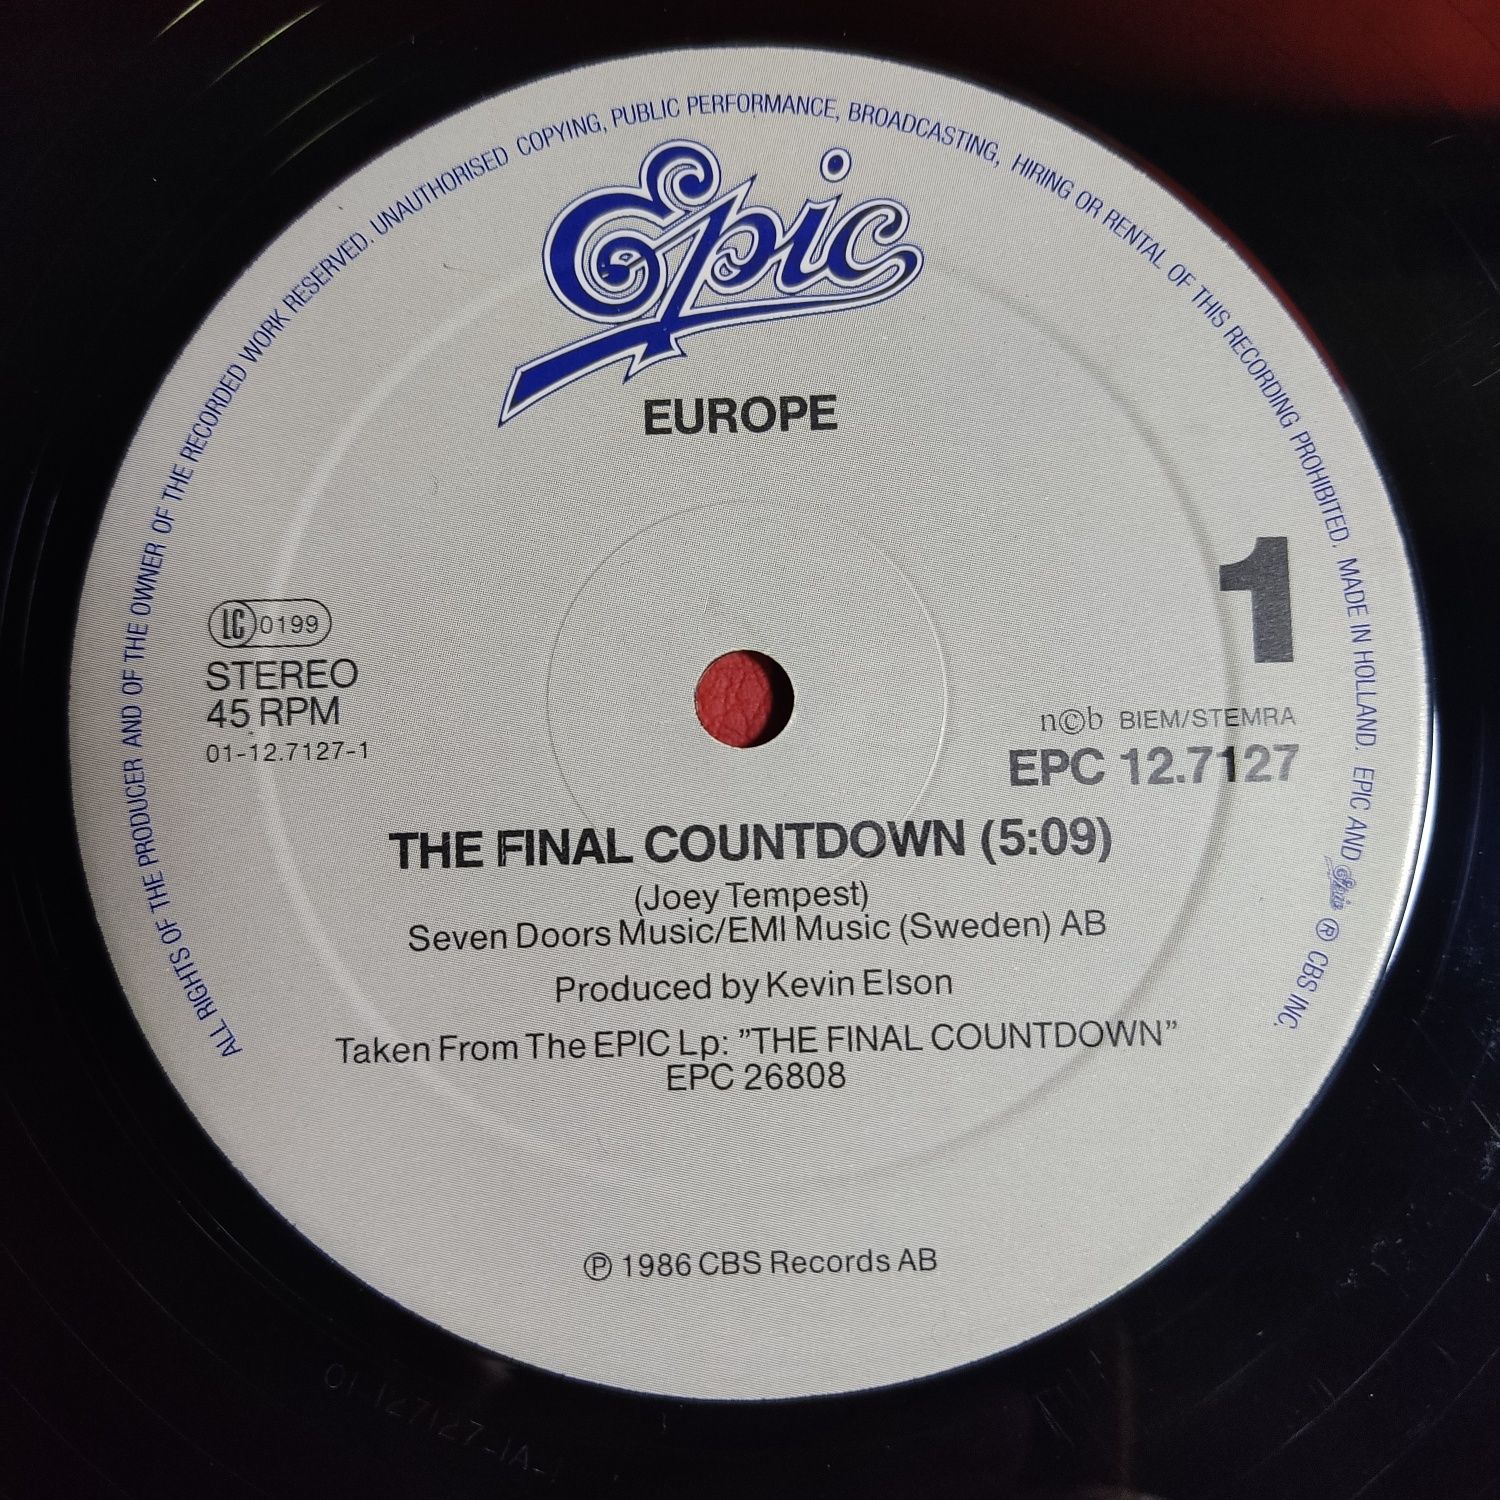 Europe - The final countdown.Maxi - single.1986.